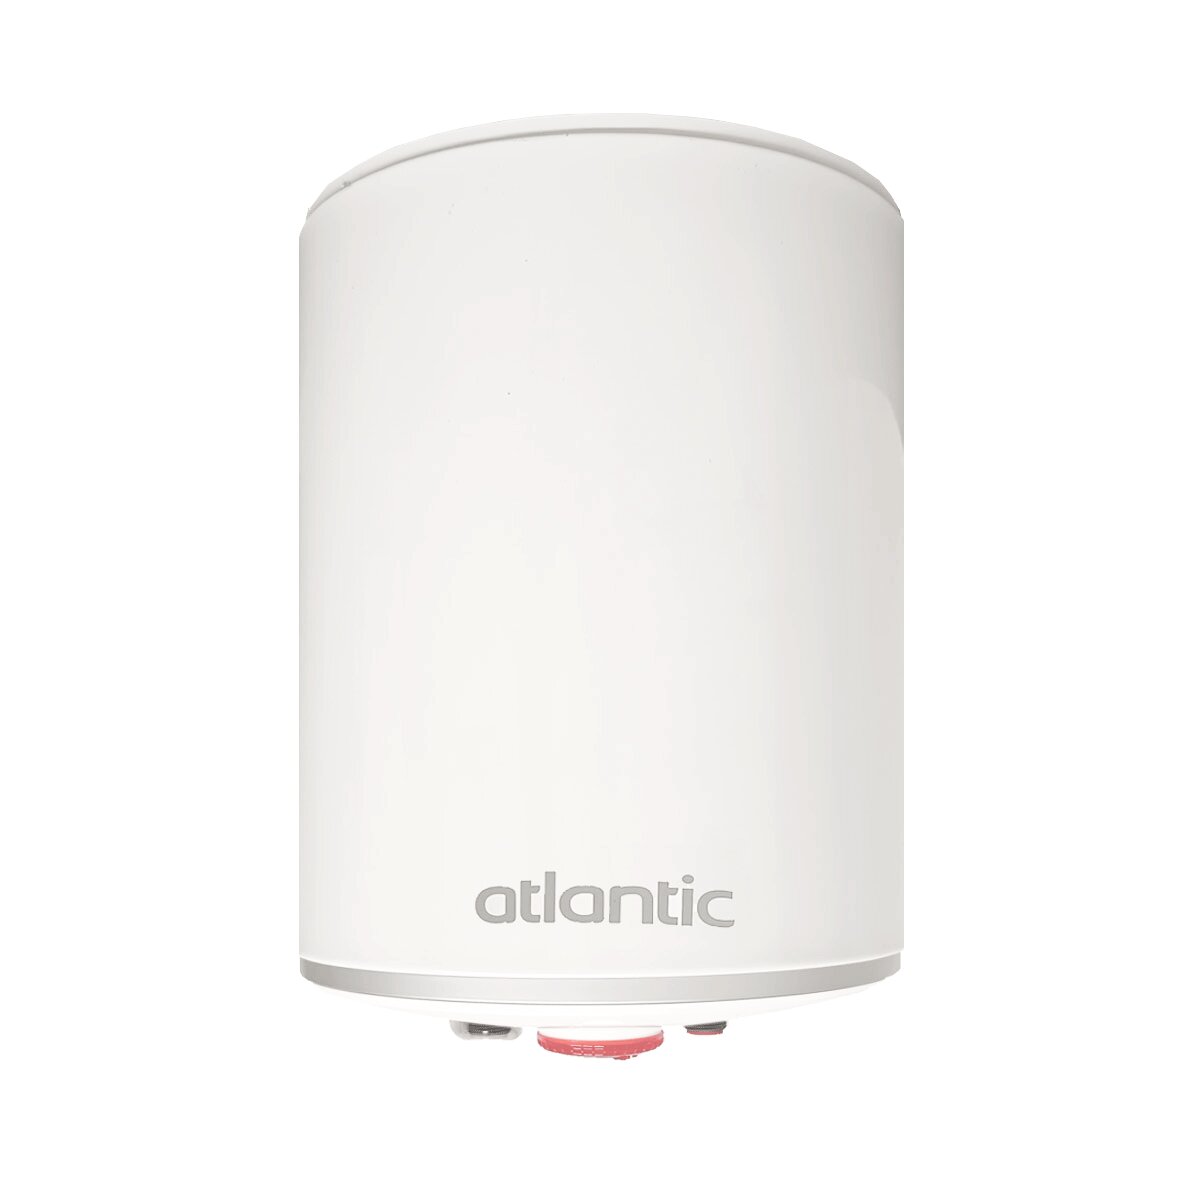 EGO Atlantic 10 liter rapid over-sink electric water heater, 2 year guarantee